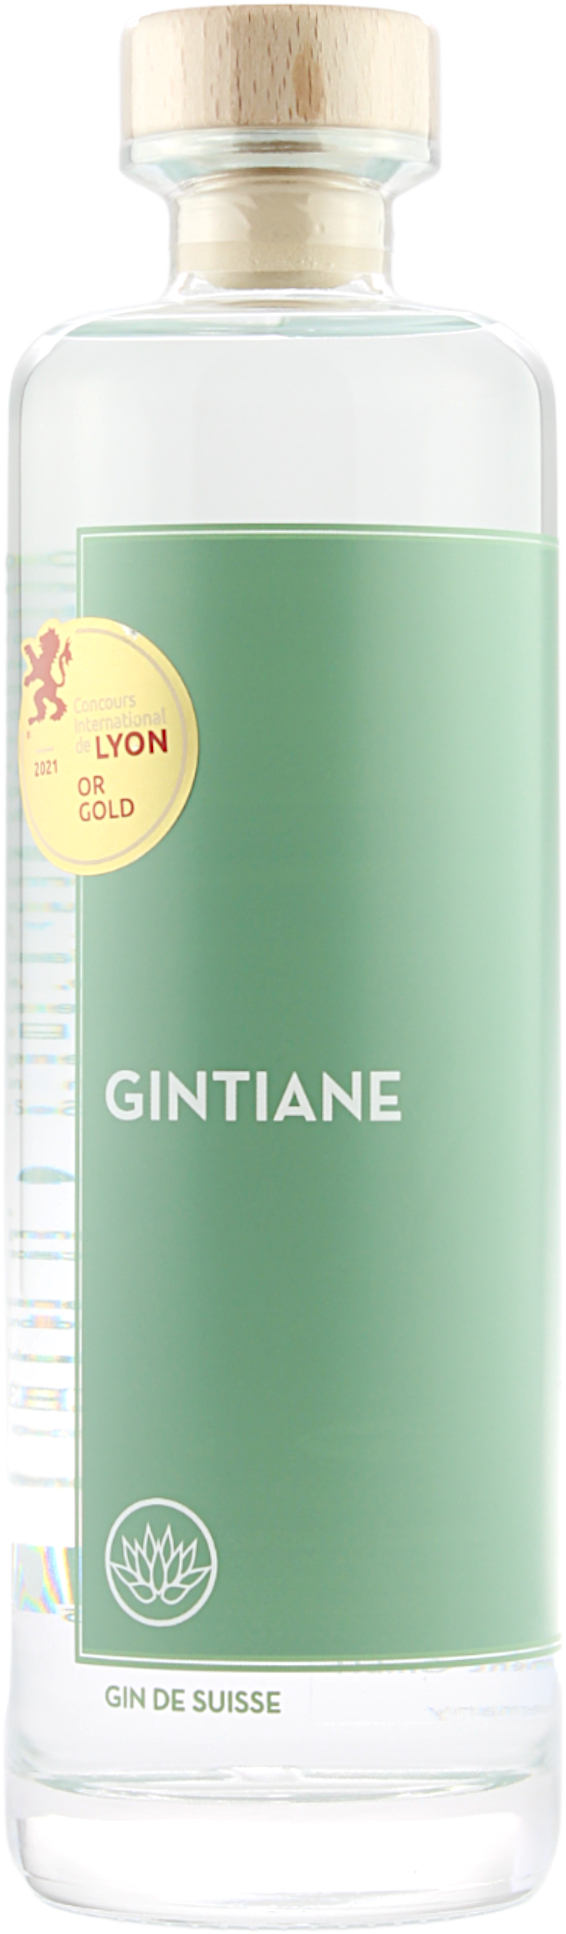 Larusee Gin Gintiane 41.0% 0,5l